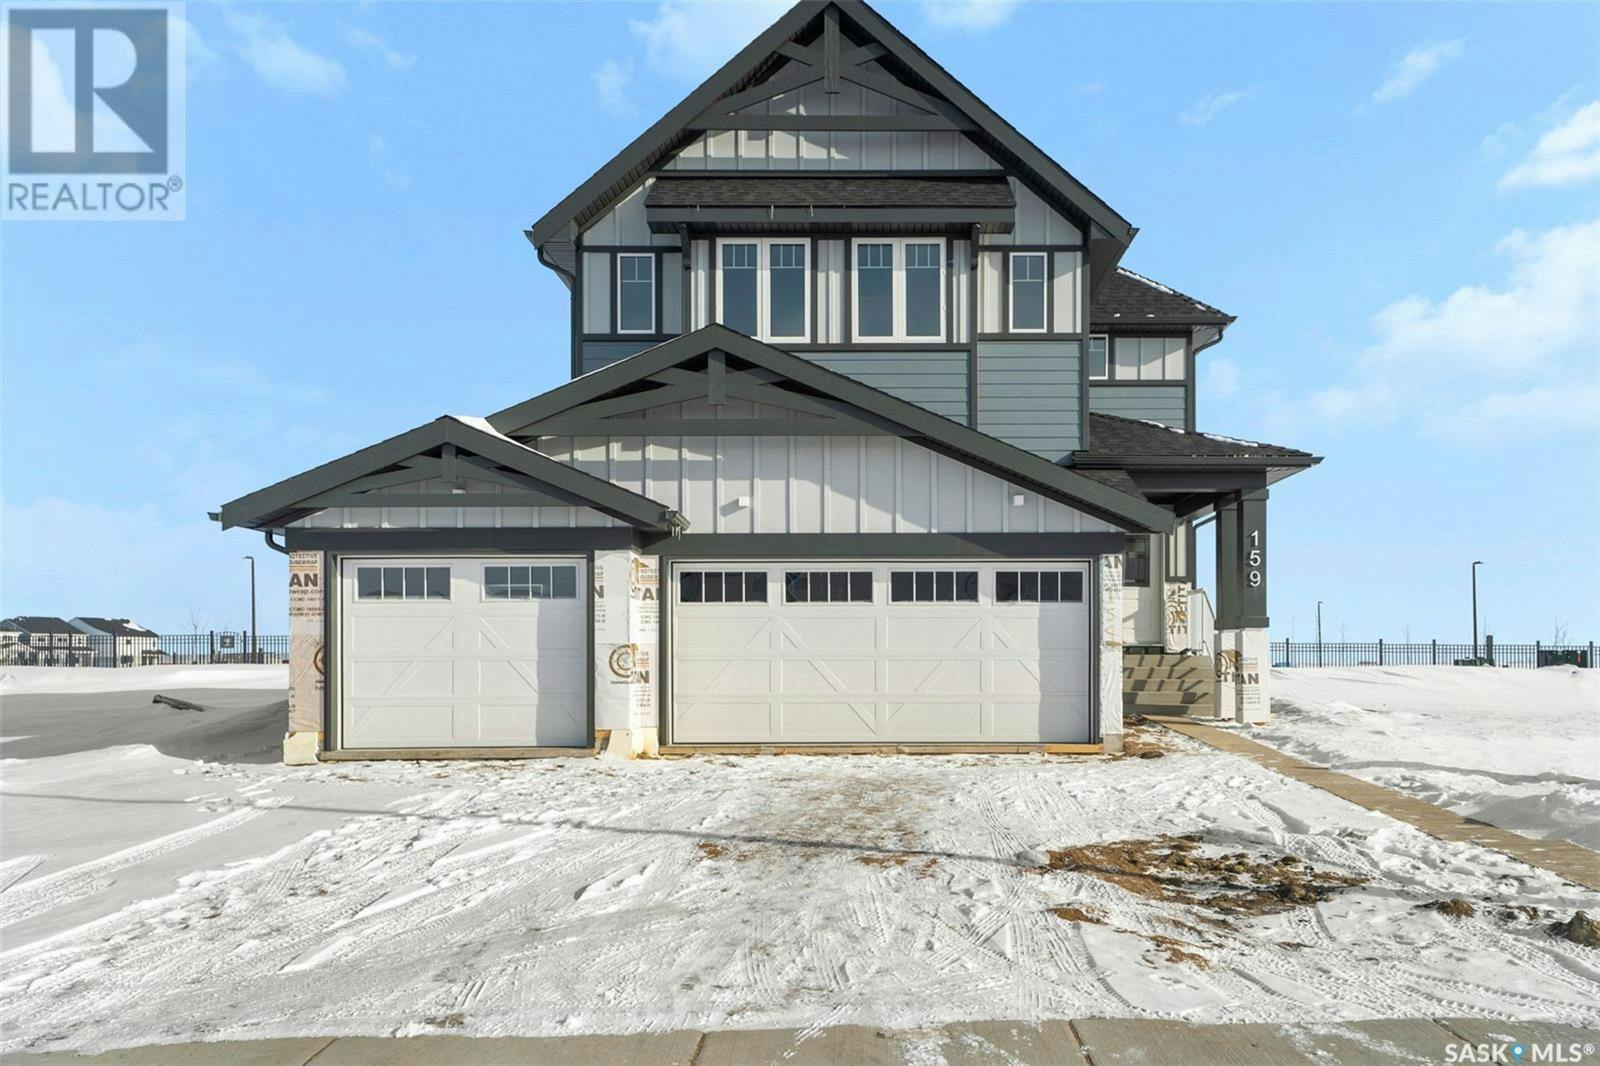 Commercial Property for sale: 159 Woolf Bend,Saskatoon,Saskatchewan